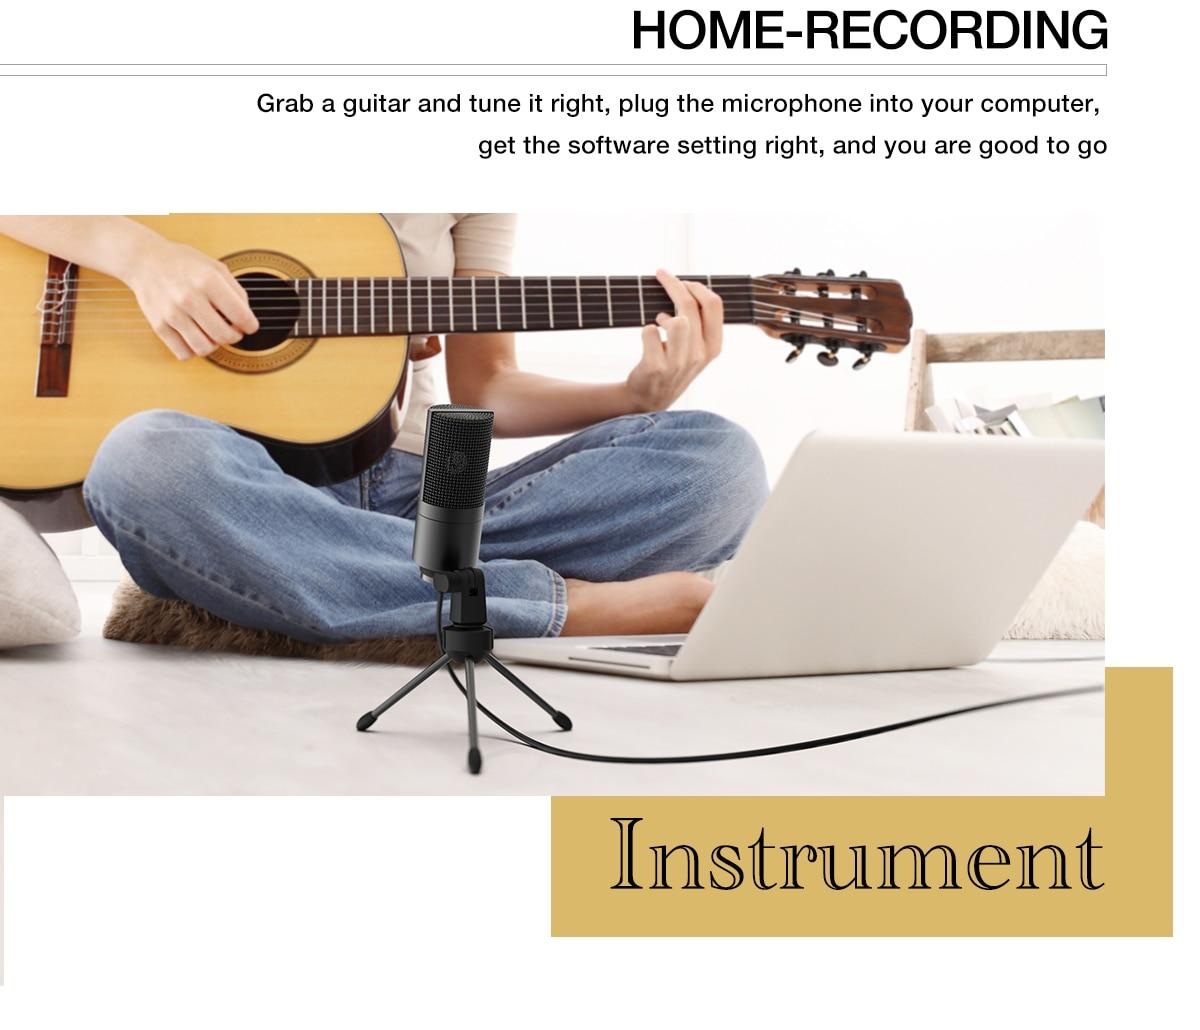 Fifine Metal USB Condenser Recording Microphone For Laptop Windows Cardioid Studio Recording Vocals Voice Over,YouTube-K669